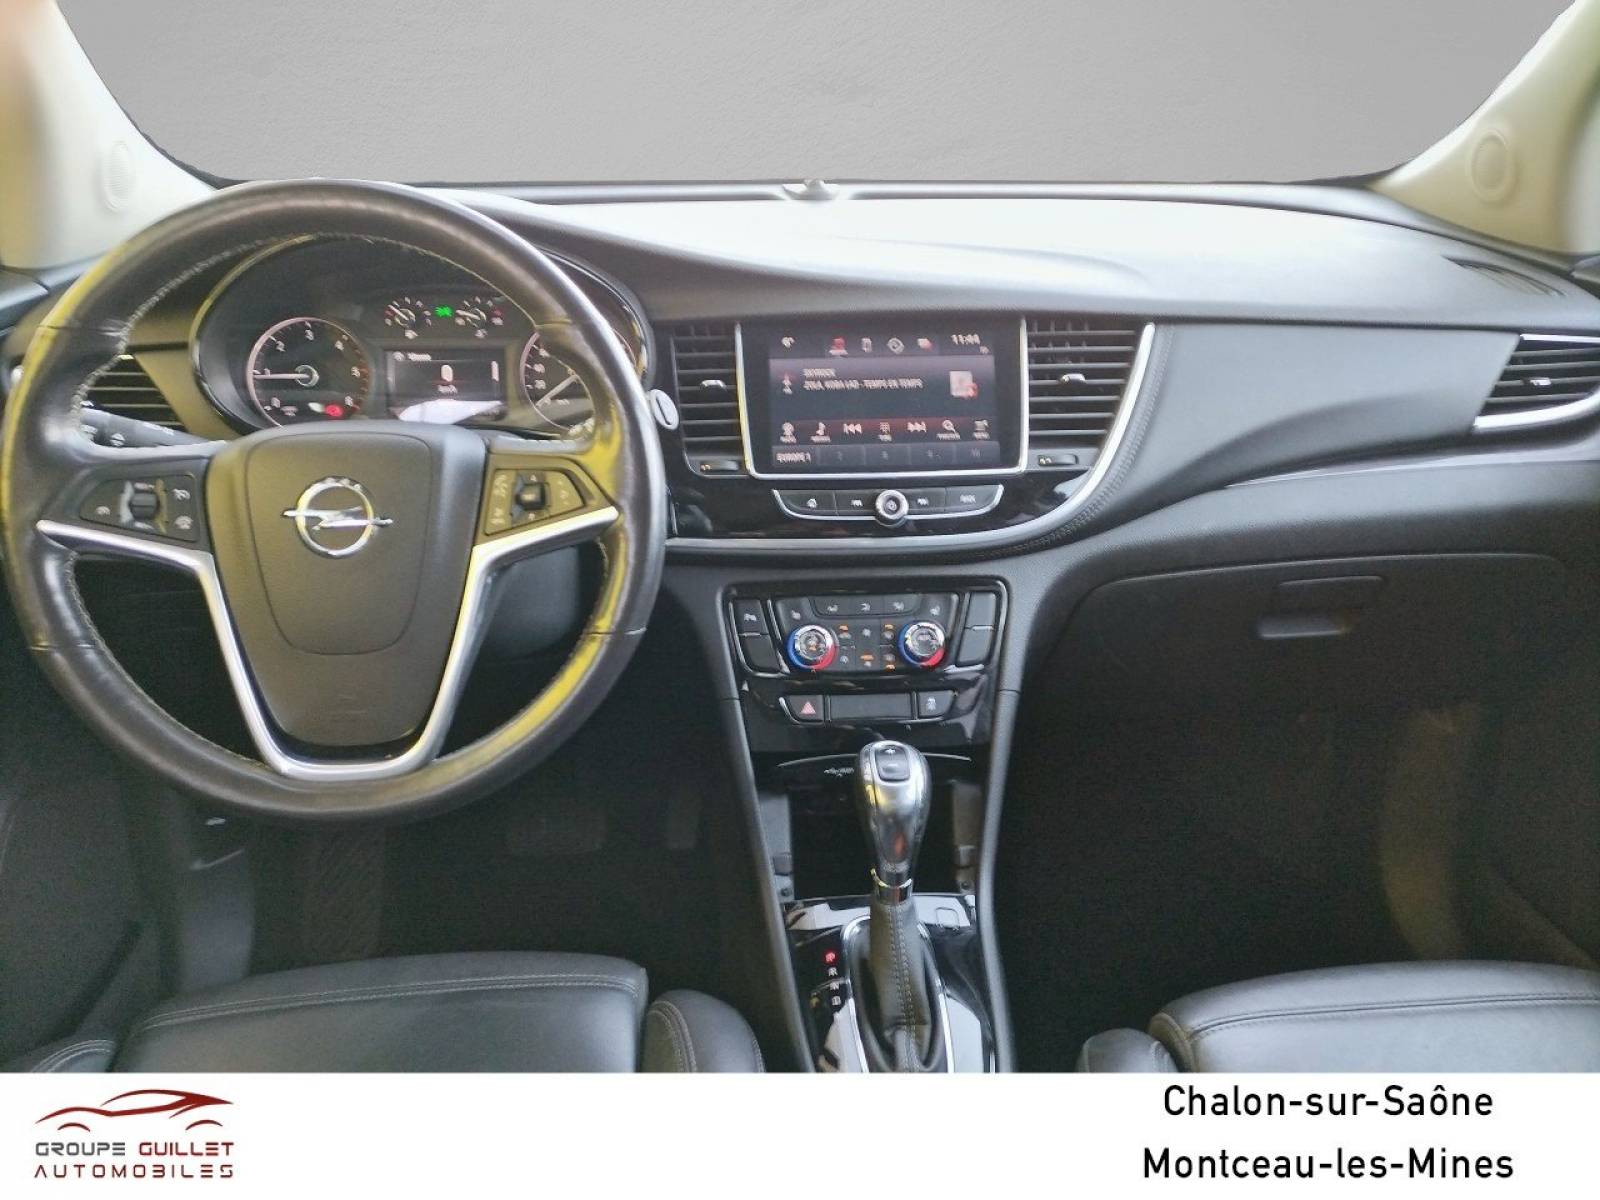 OPEL Mokka X 1.6 CDTI - 136 ch 4x2 BVA6 - véhicule d'occasion - Groupe Guillet - Opel Magicauto Chalon - 71380 - Saint-Marcel - 8